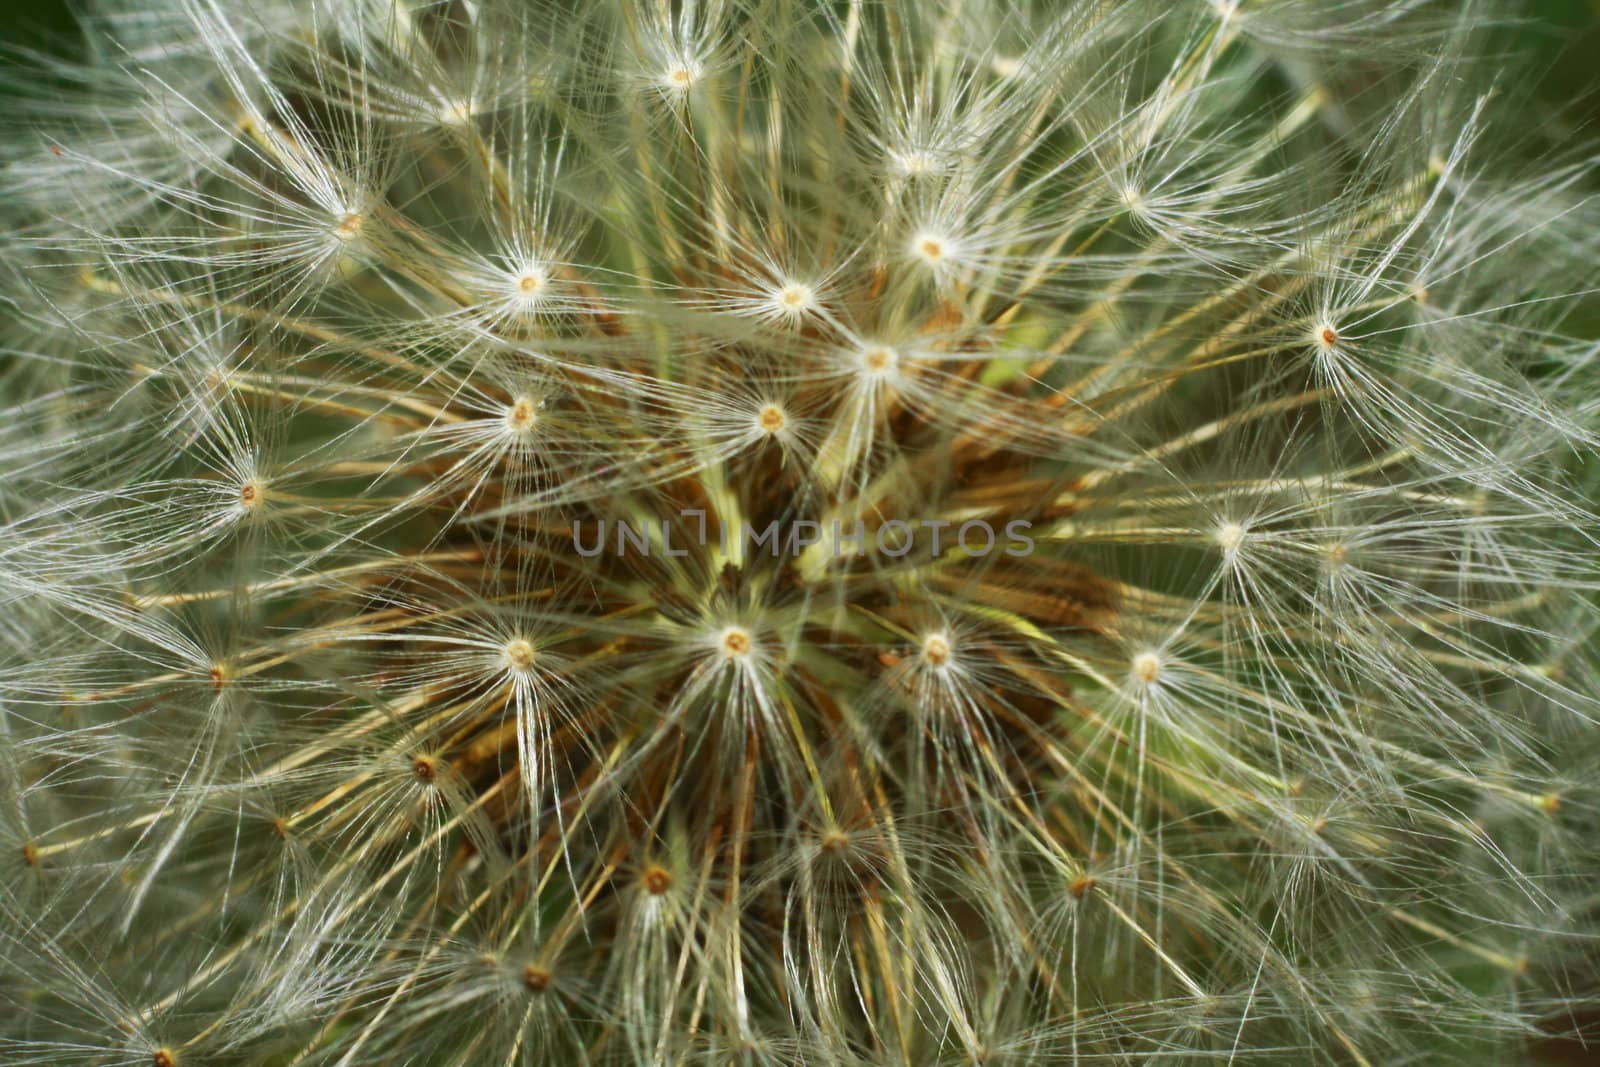 A dandelion